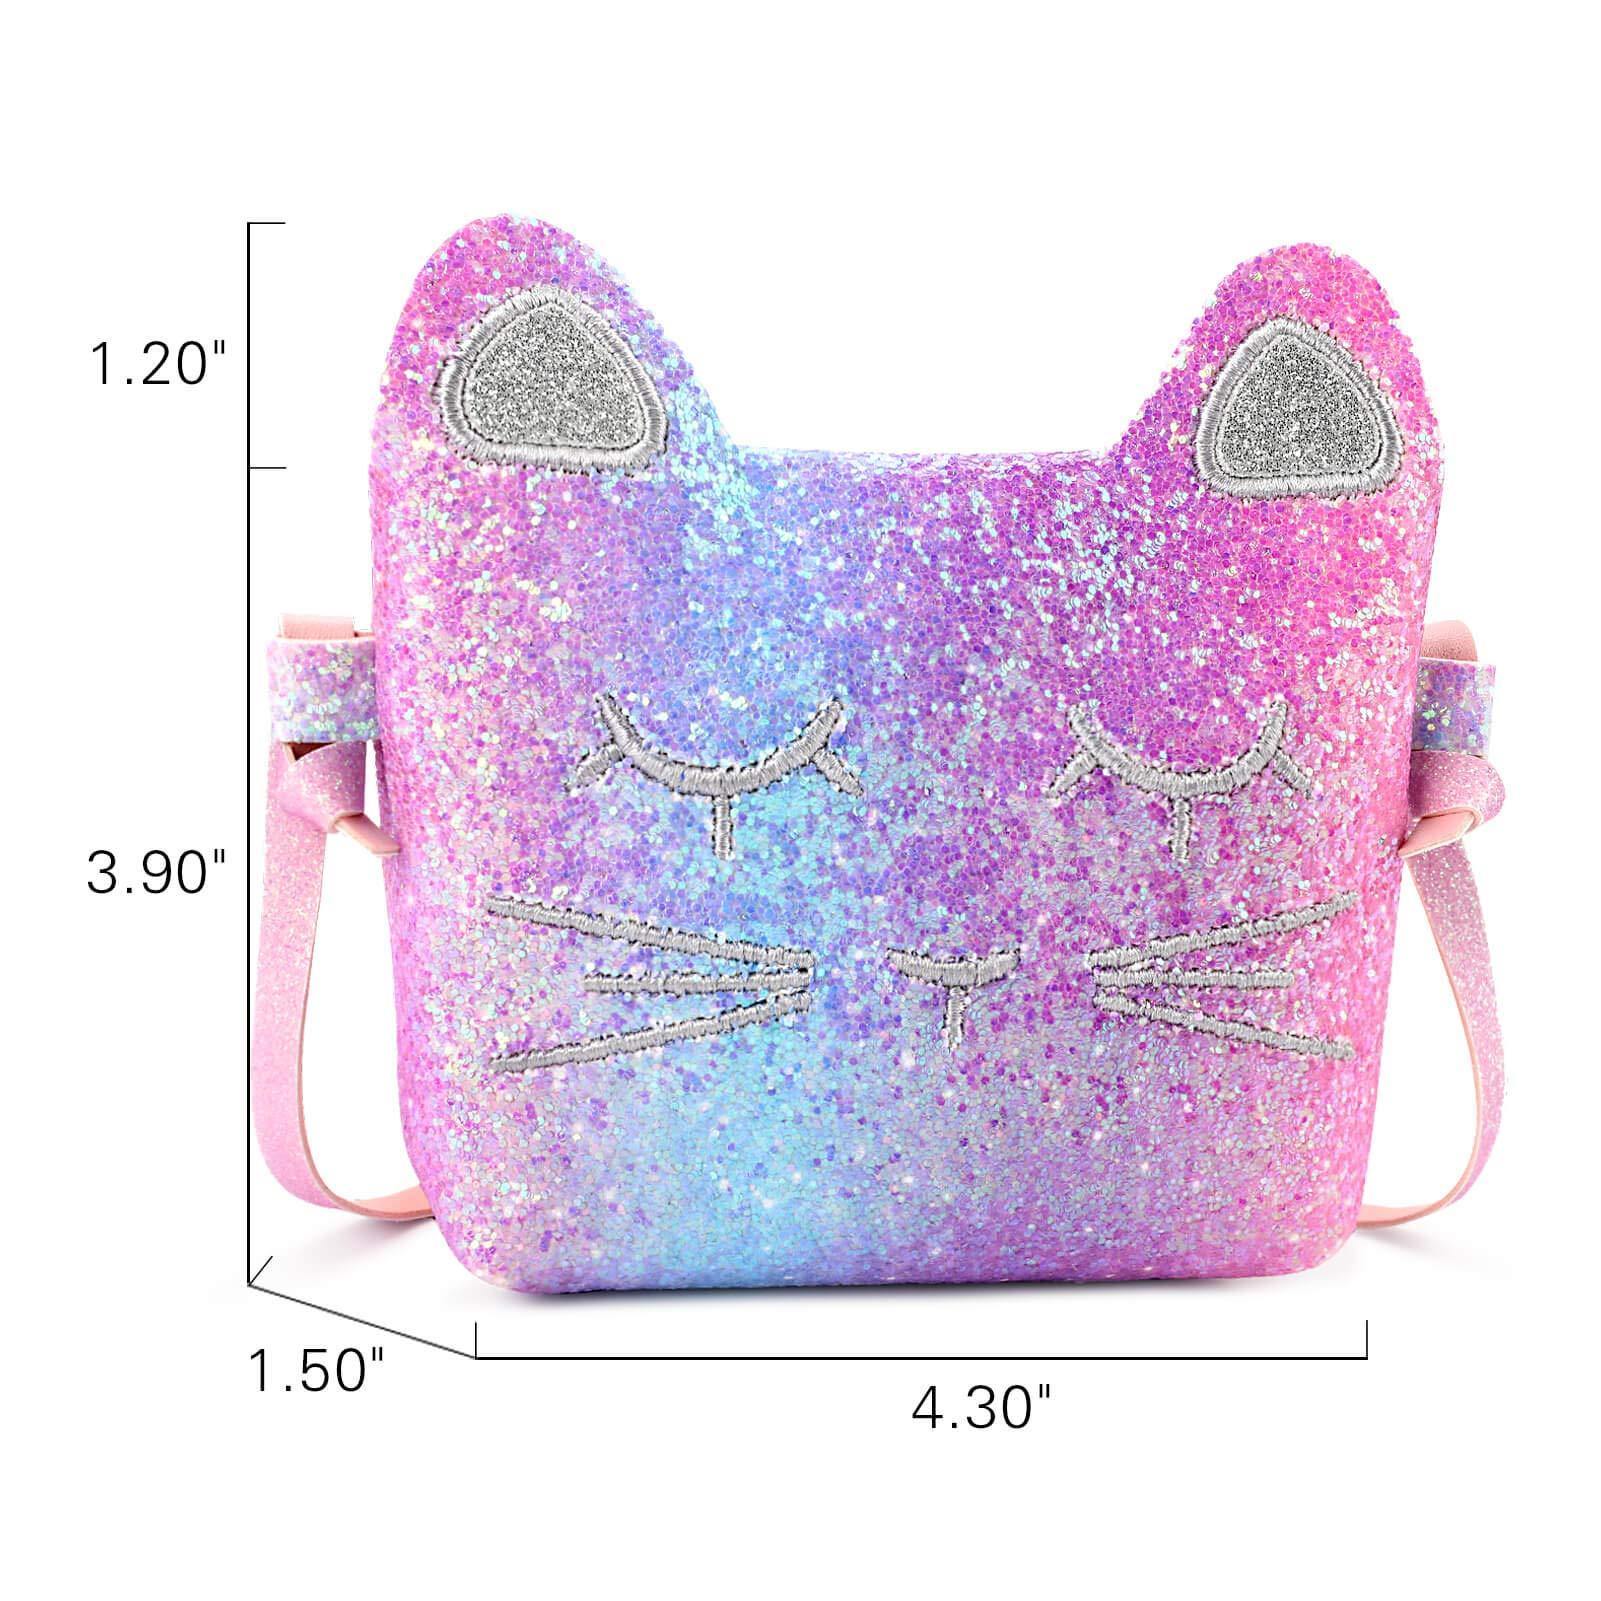 Buy Faux Leather Pink Nylon Shoulder Bag Online - Accessorize India